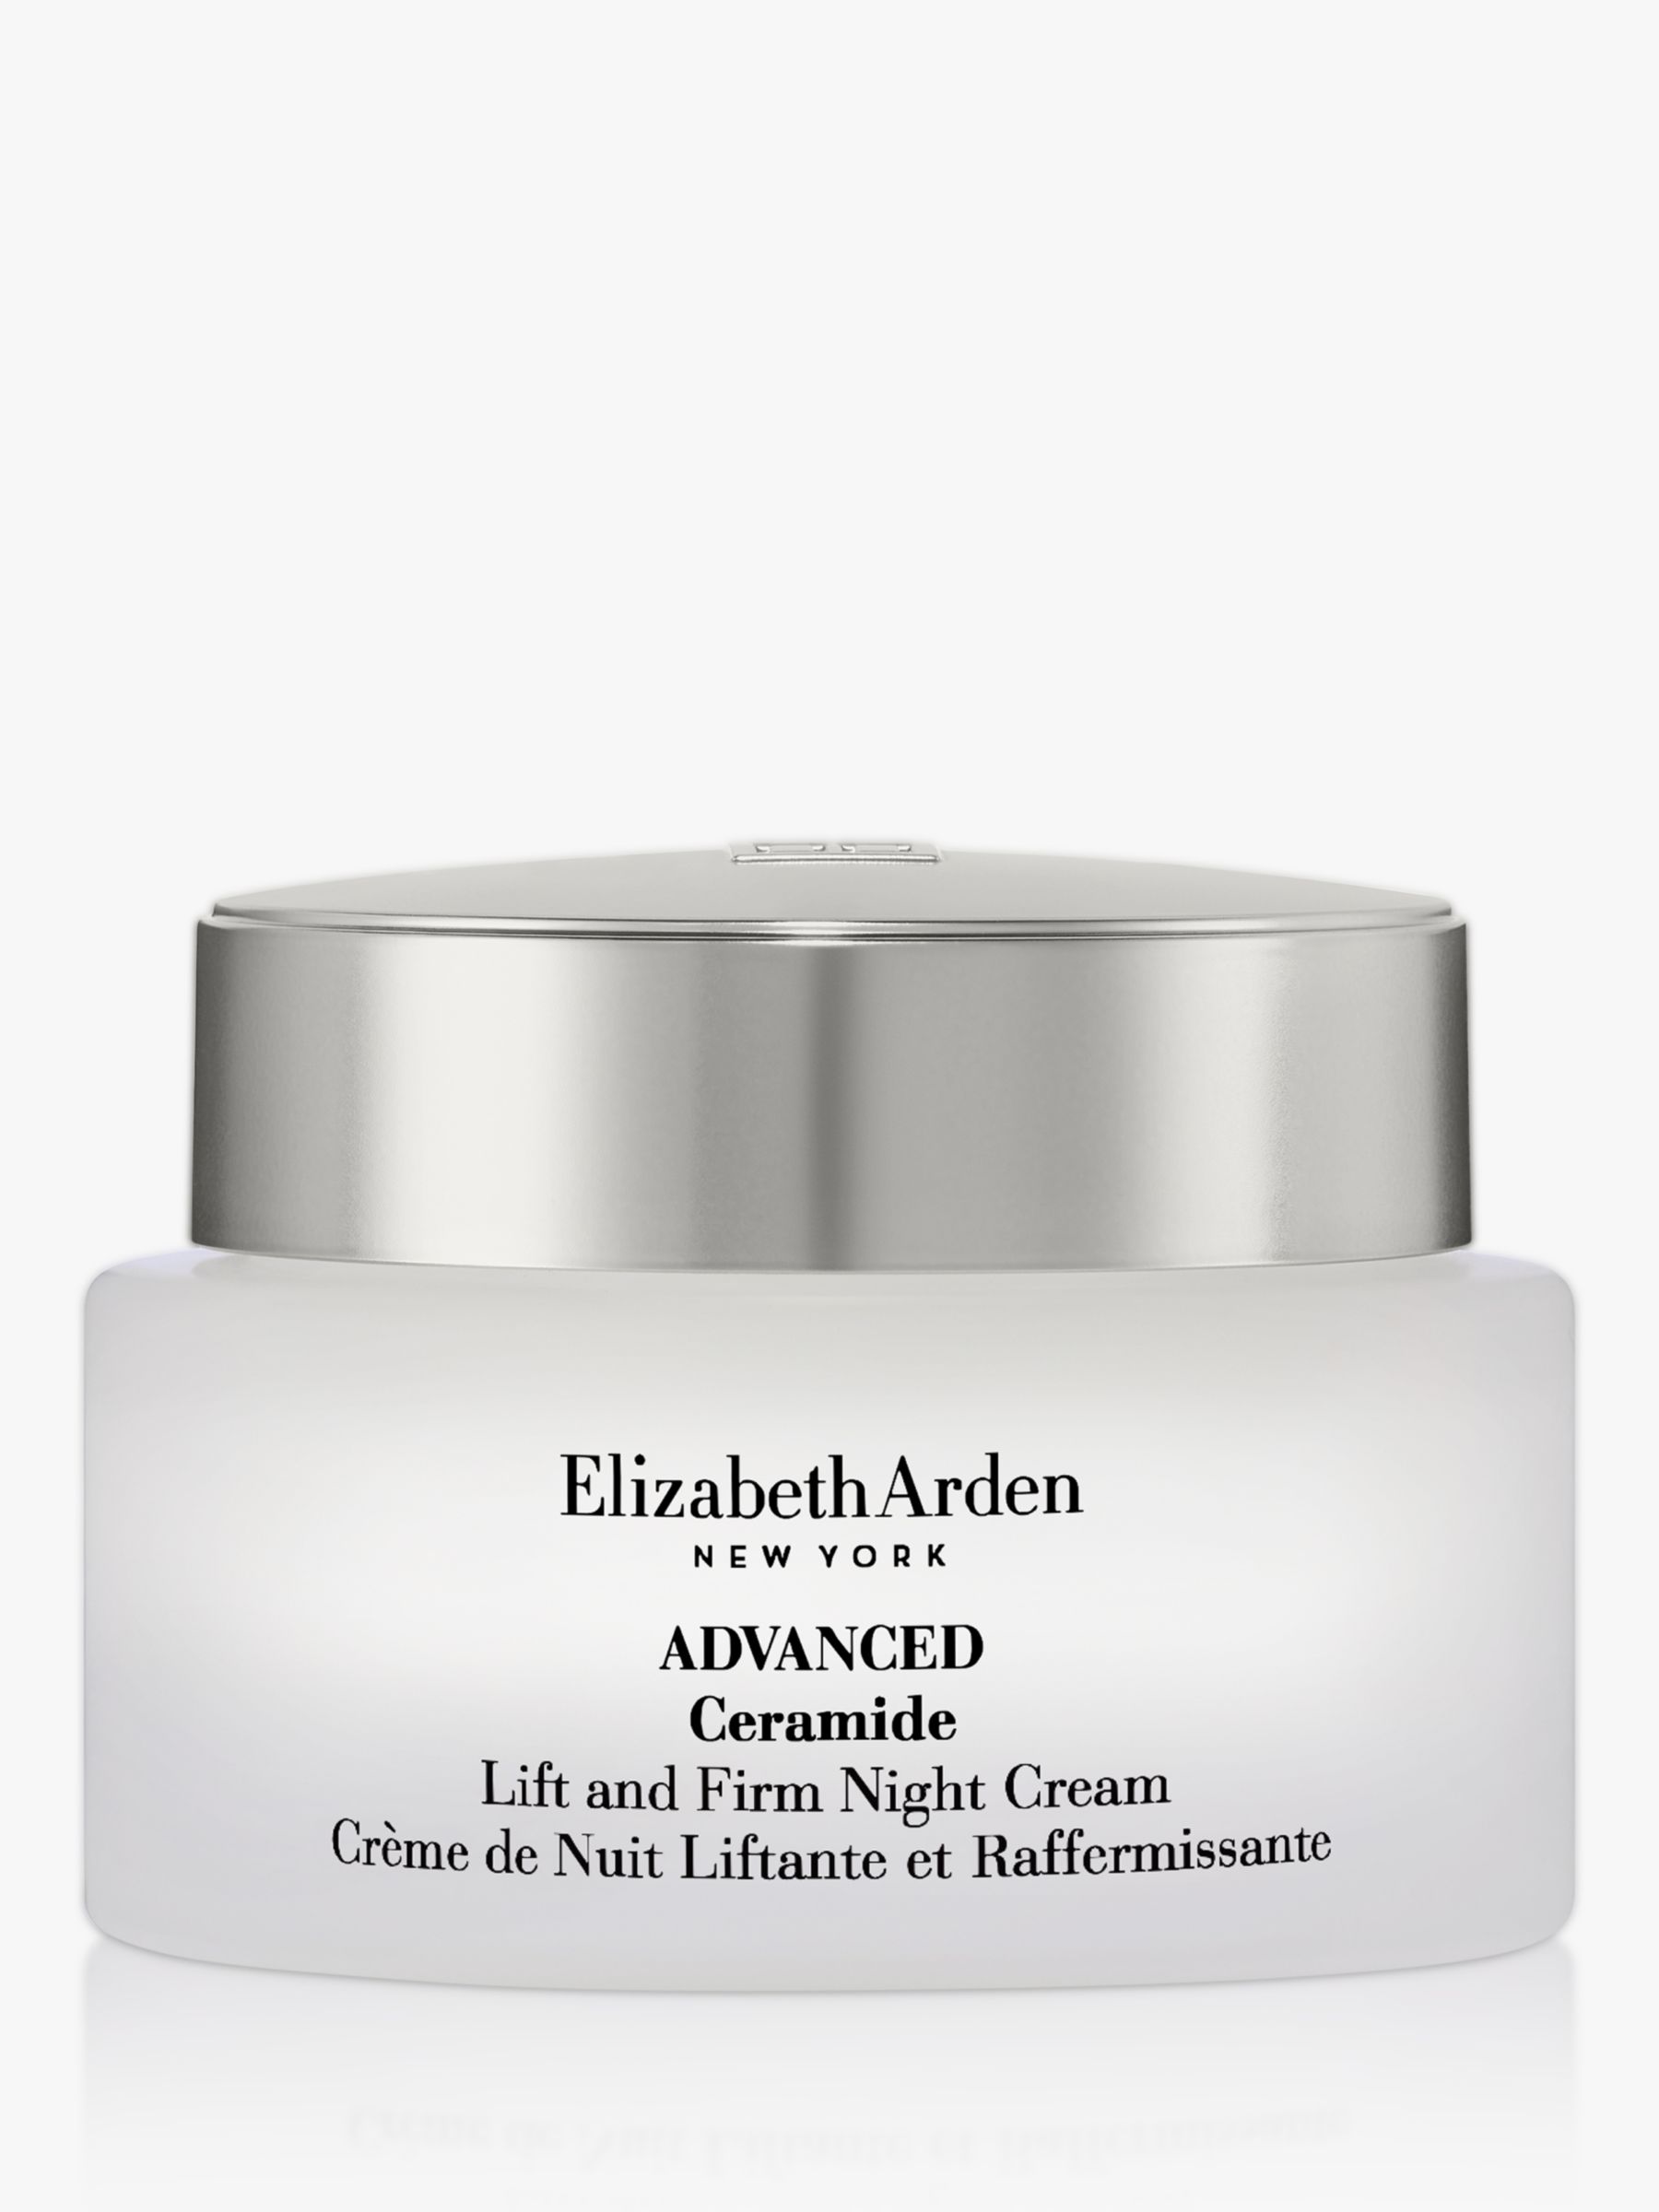 Elizabeth Arden Advanced Ceramide Lift and Firm Night Cream, 50ml 1